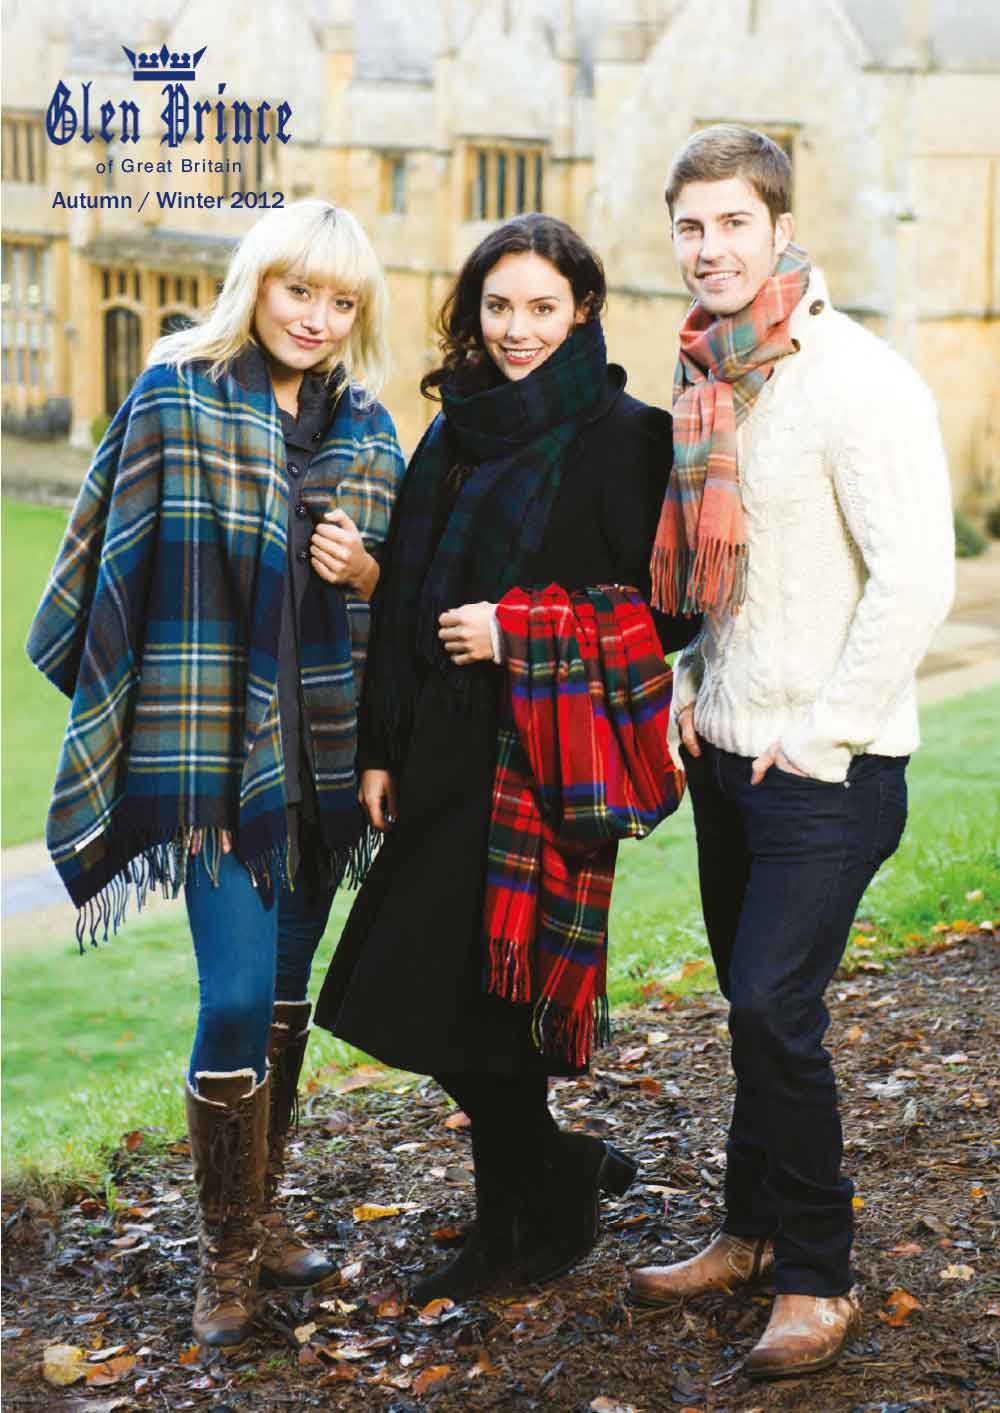 Glen Prince of Great Britain Autumn/ Winter 2012 brochure